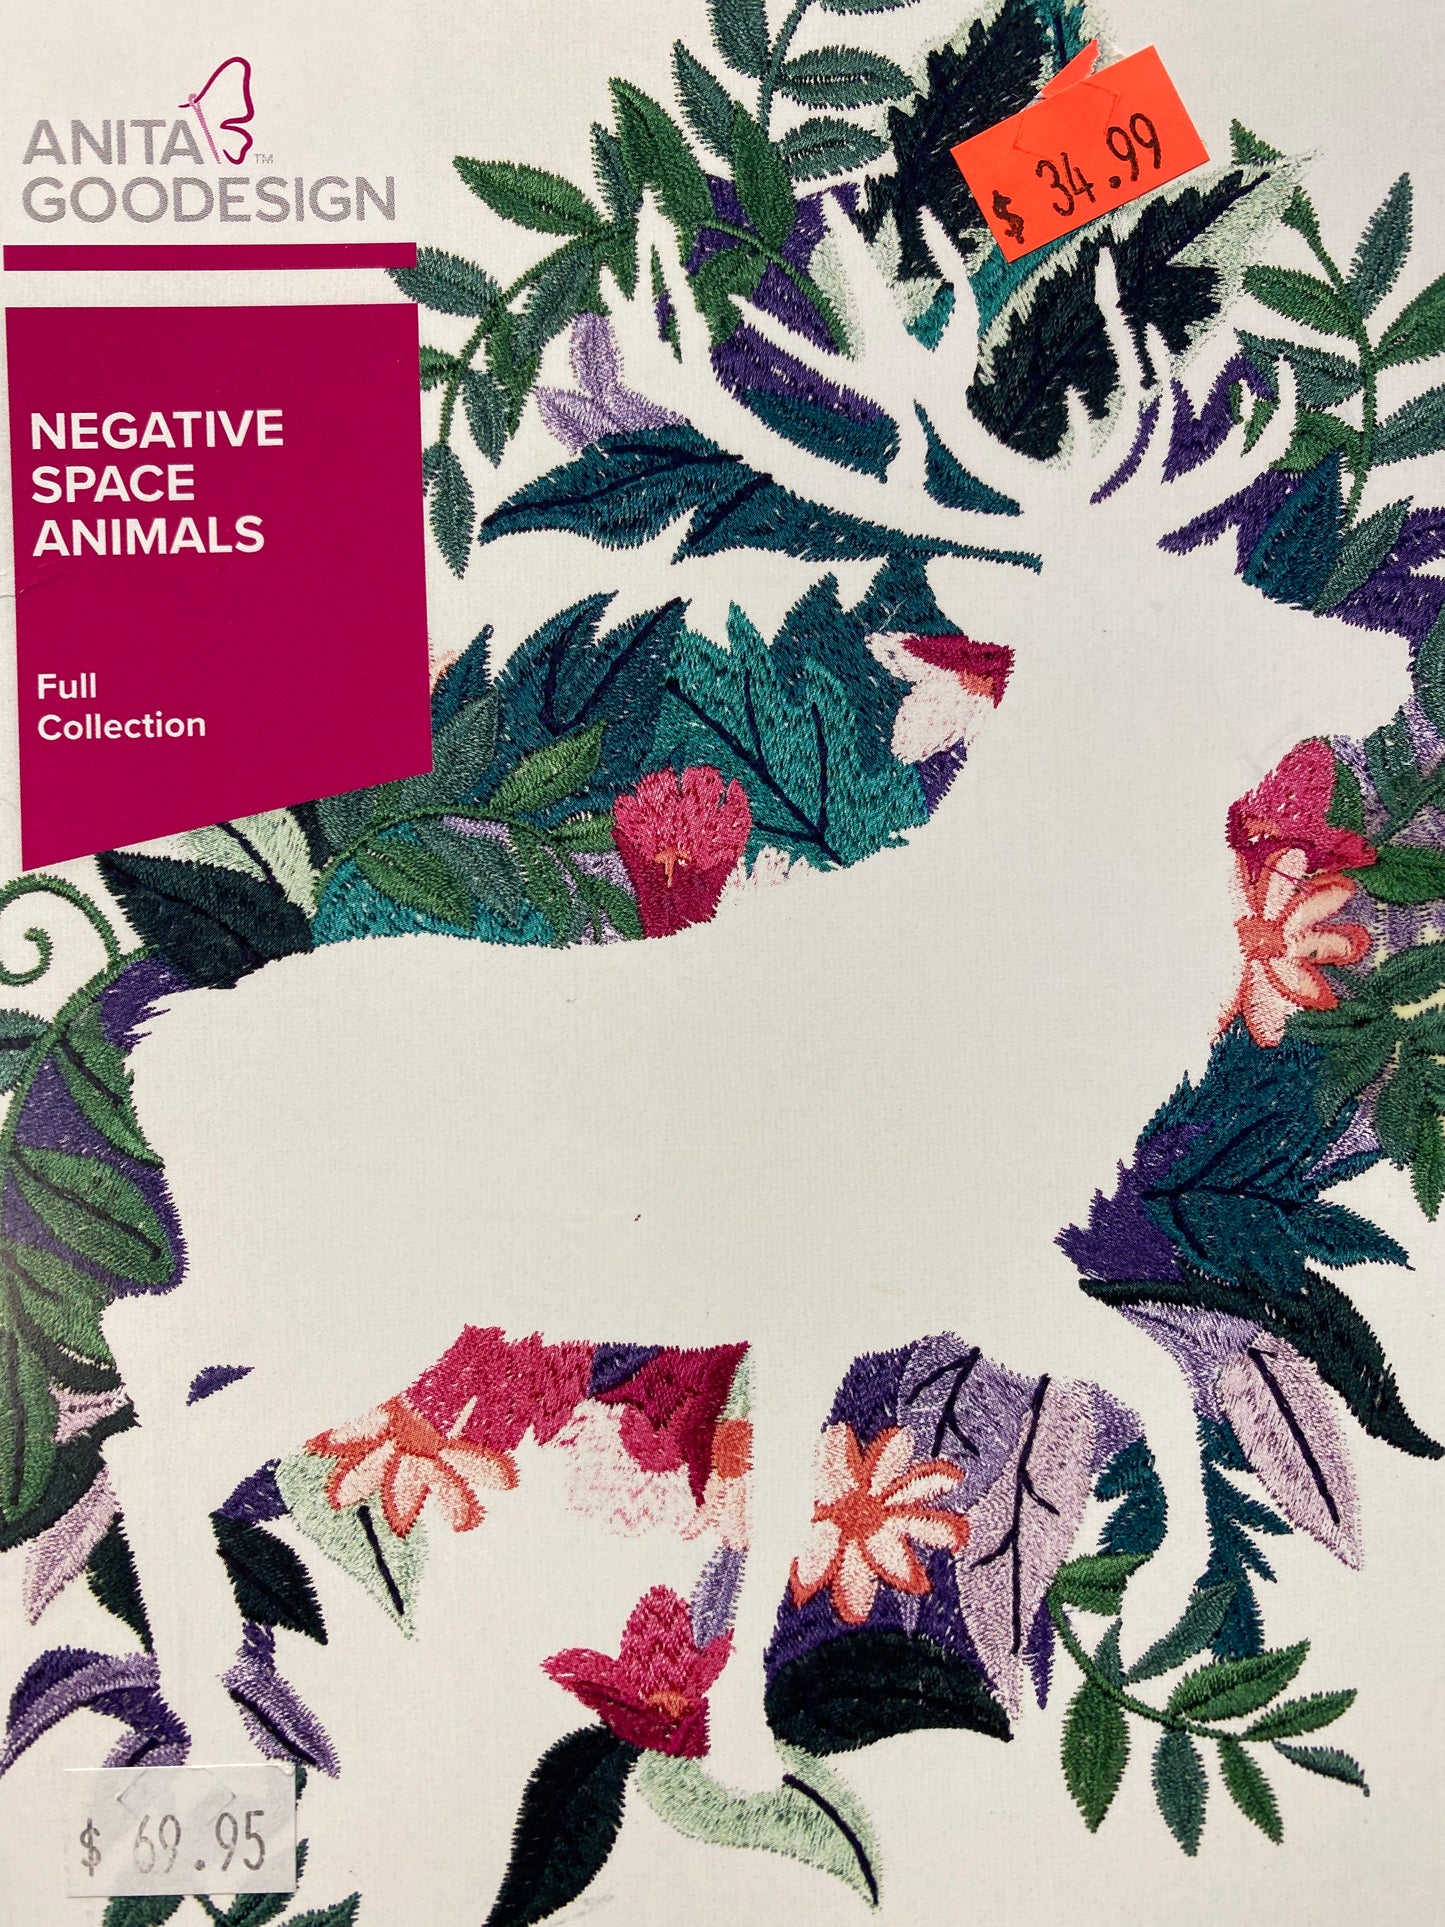 Negative Space Animals by Anita Goodesign